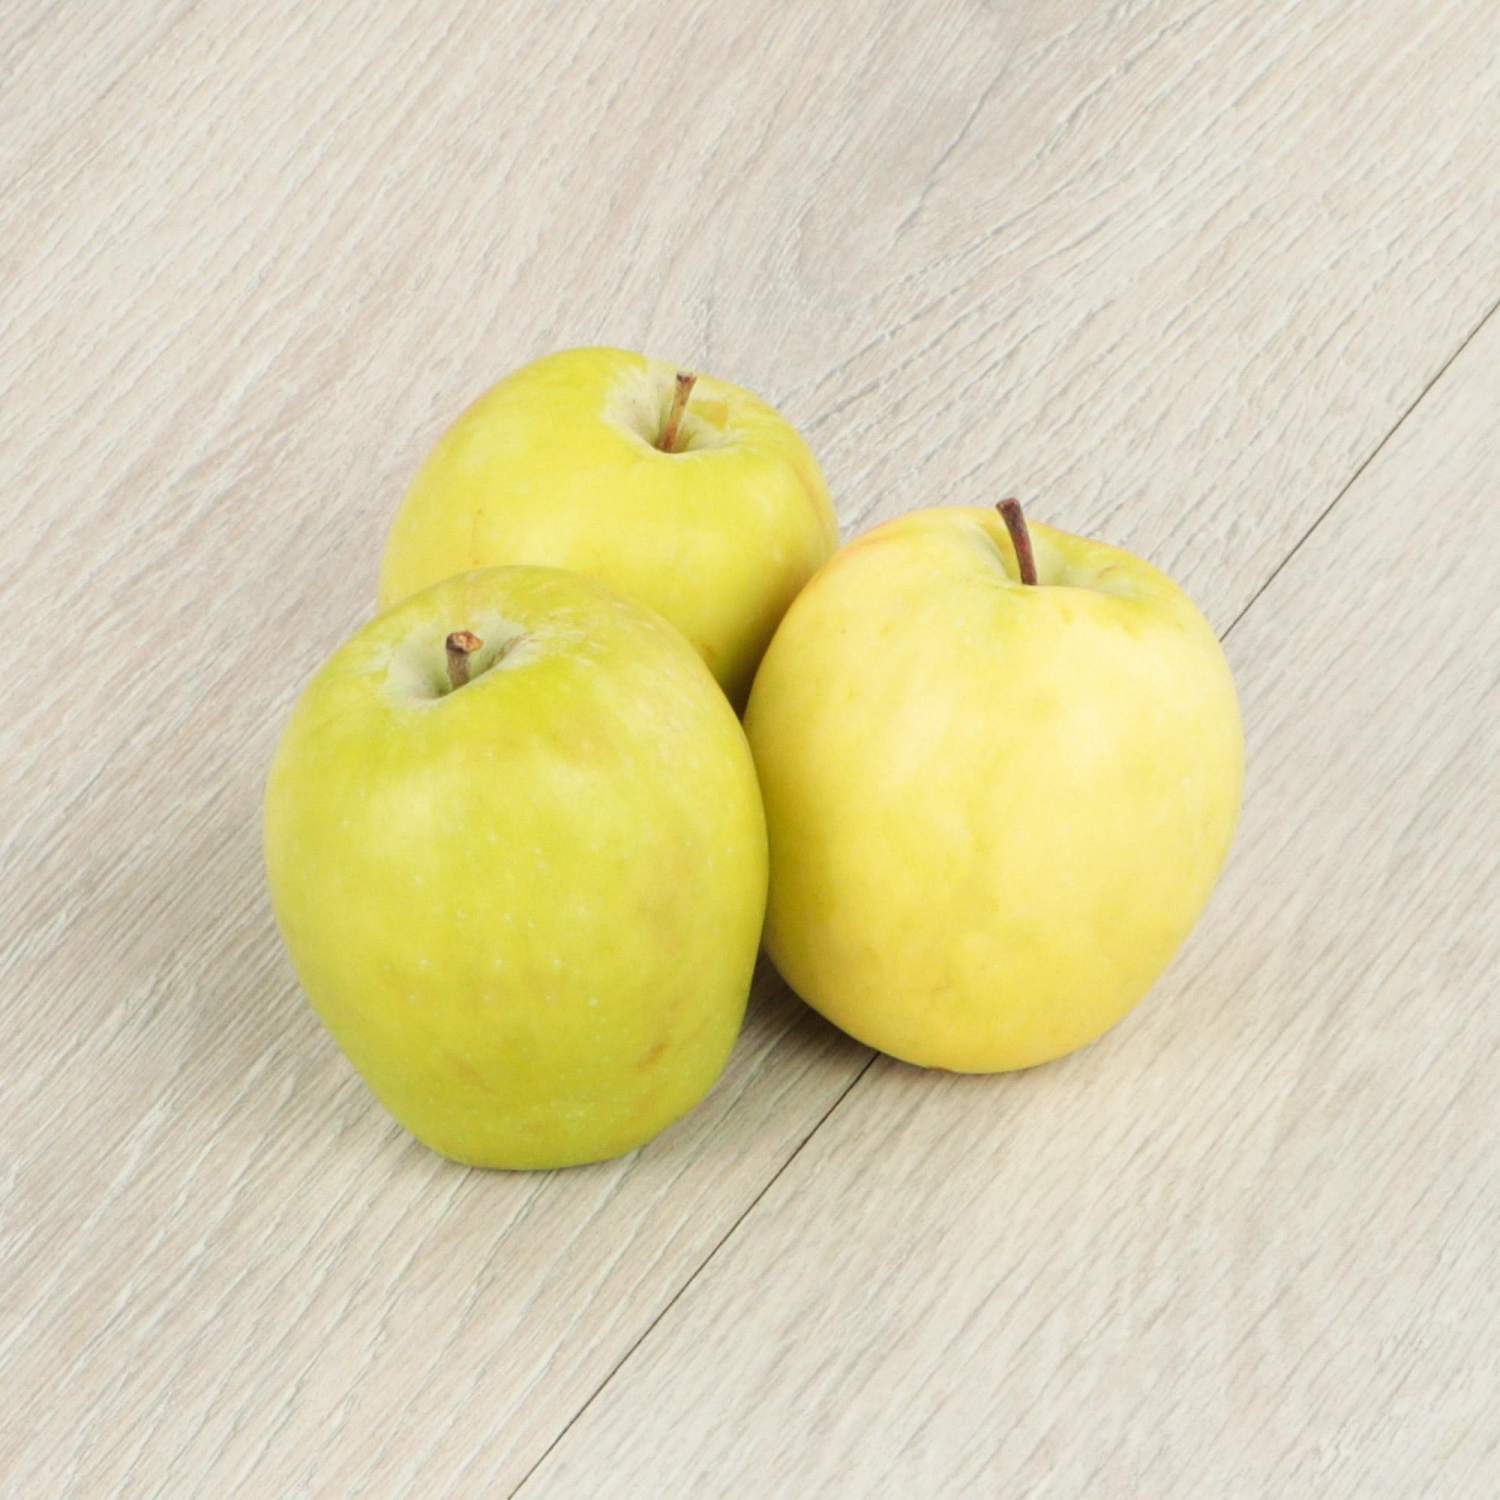 яблоки сенап или синап фото